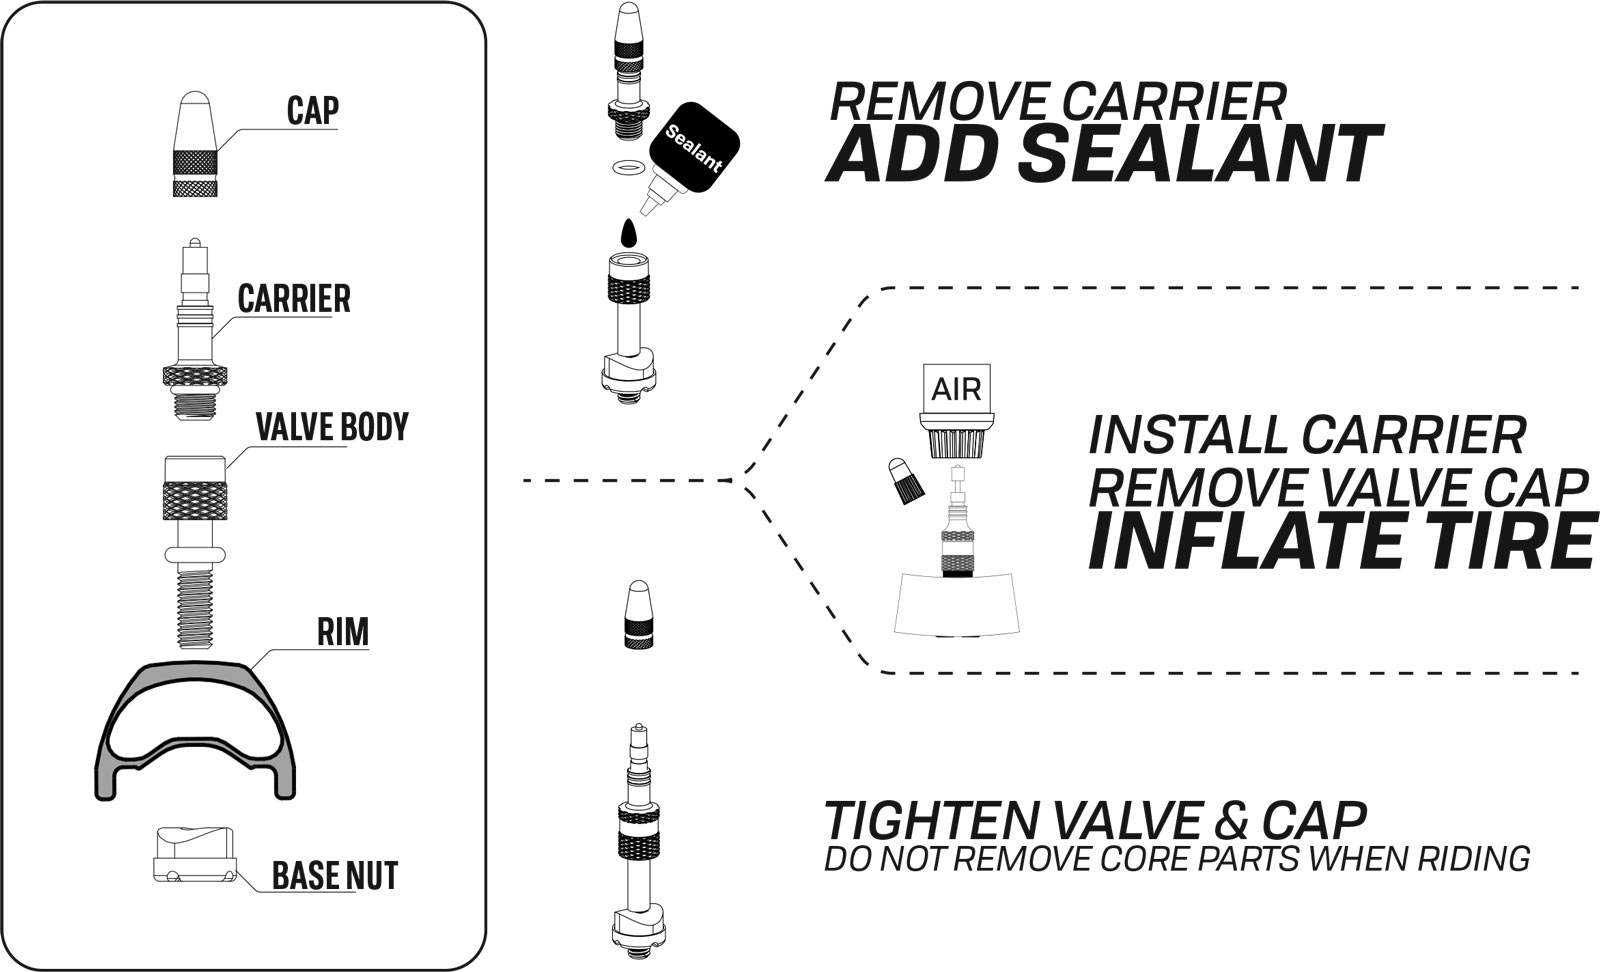 ConvertAir turns fragile Presta valves into easy-to-use, tubeless